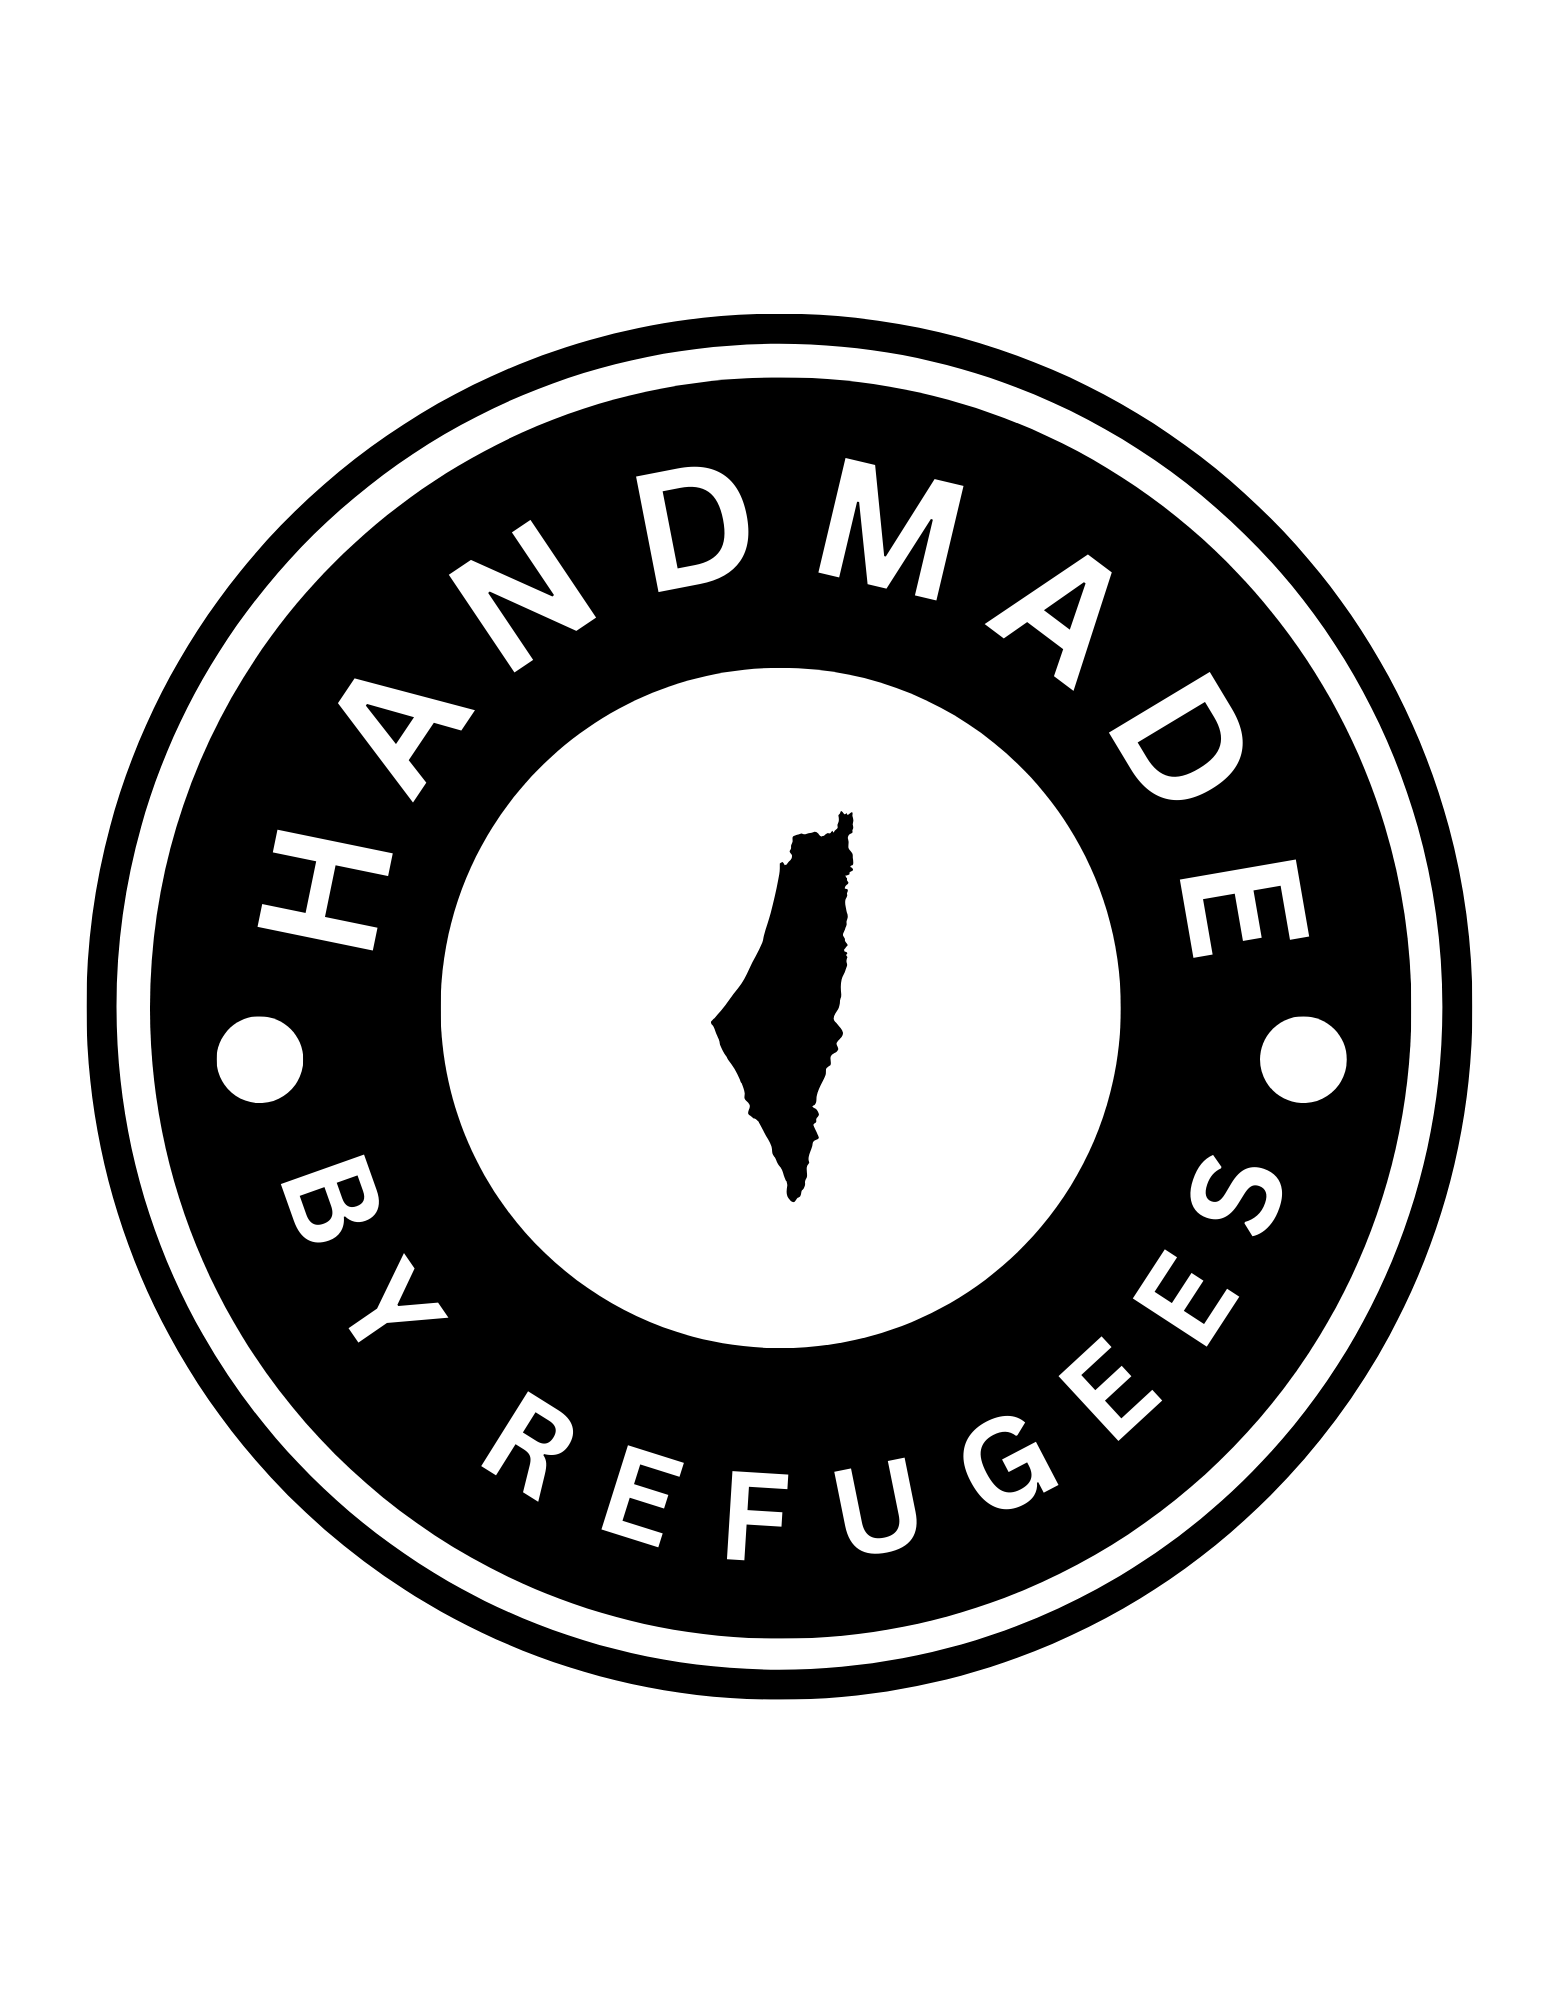 handmade by refugees logo rajaeen